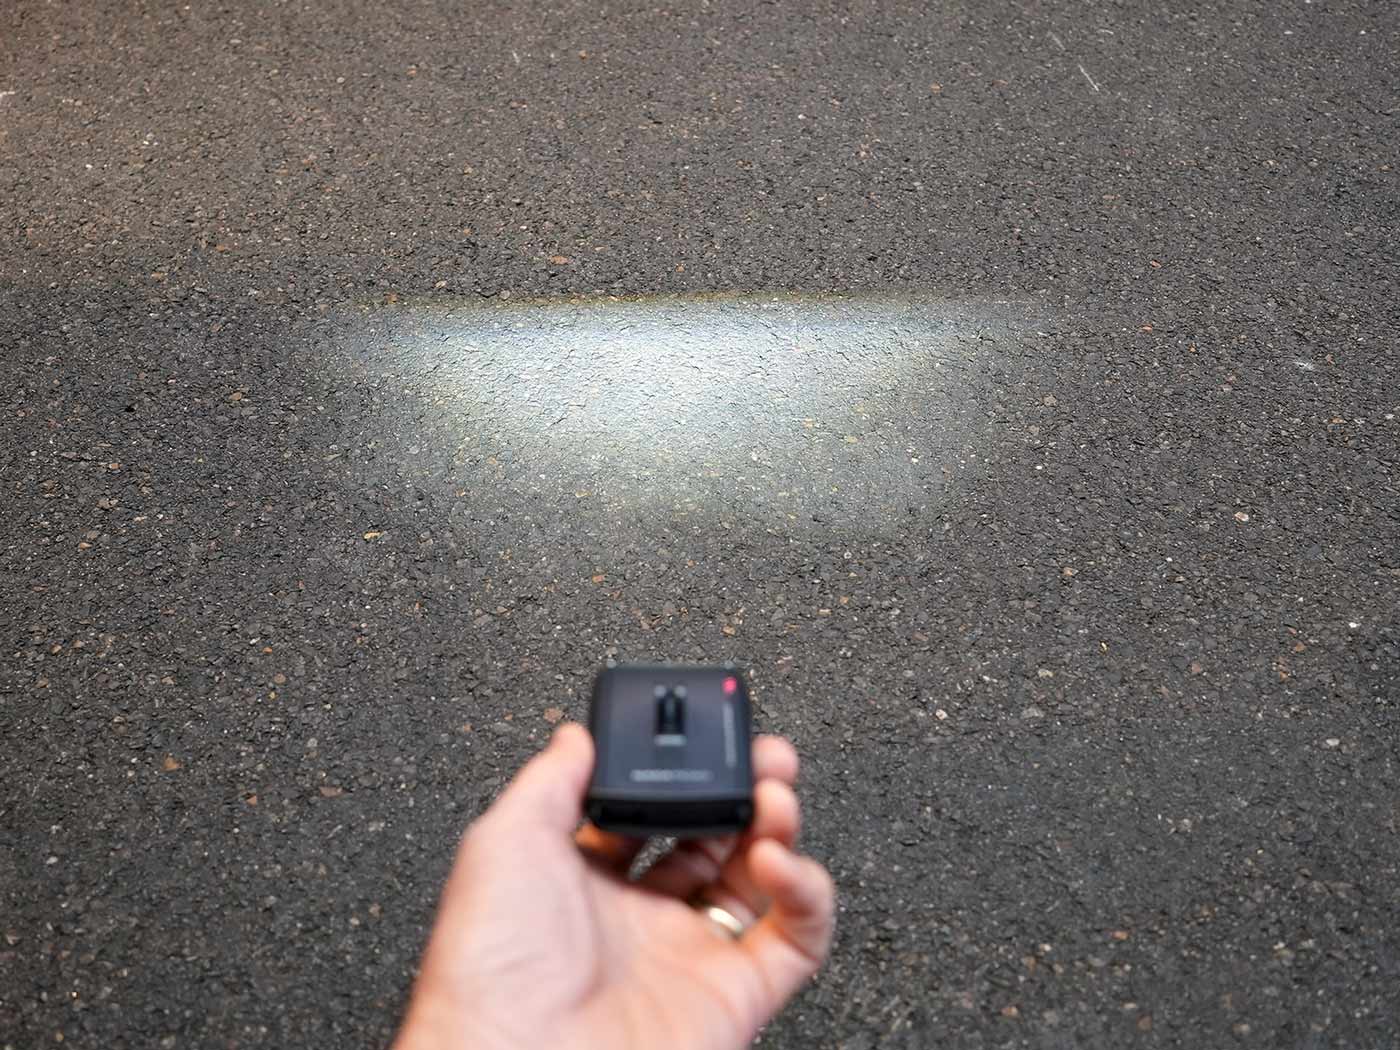 lightskin naca profile aerodynamic road bike headlight beam pattern on ground